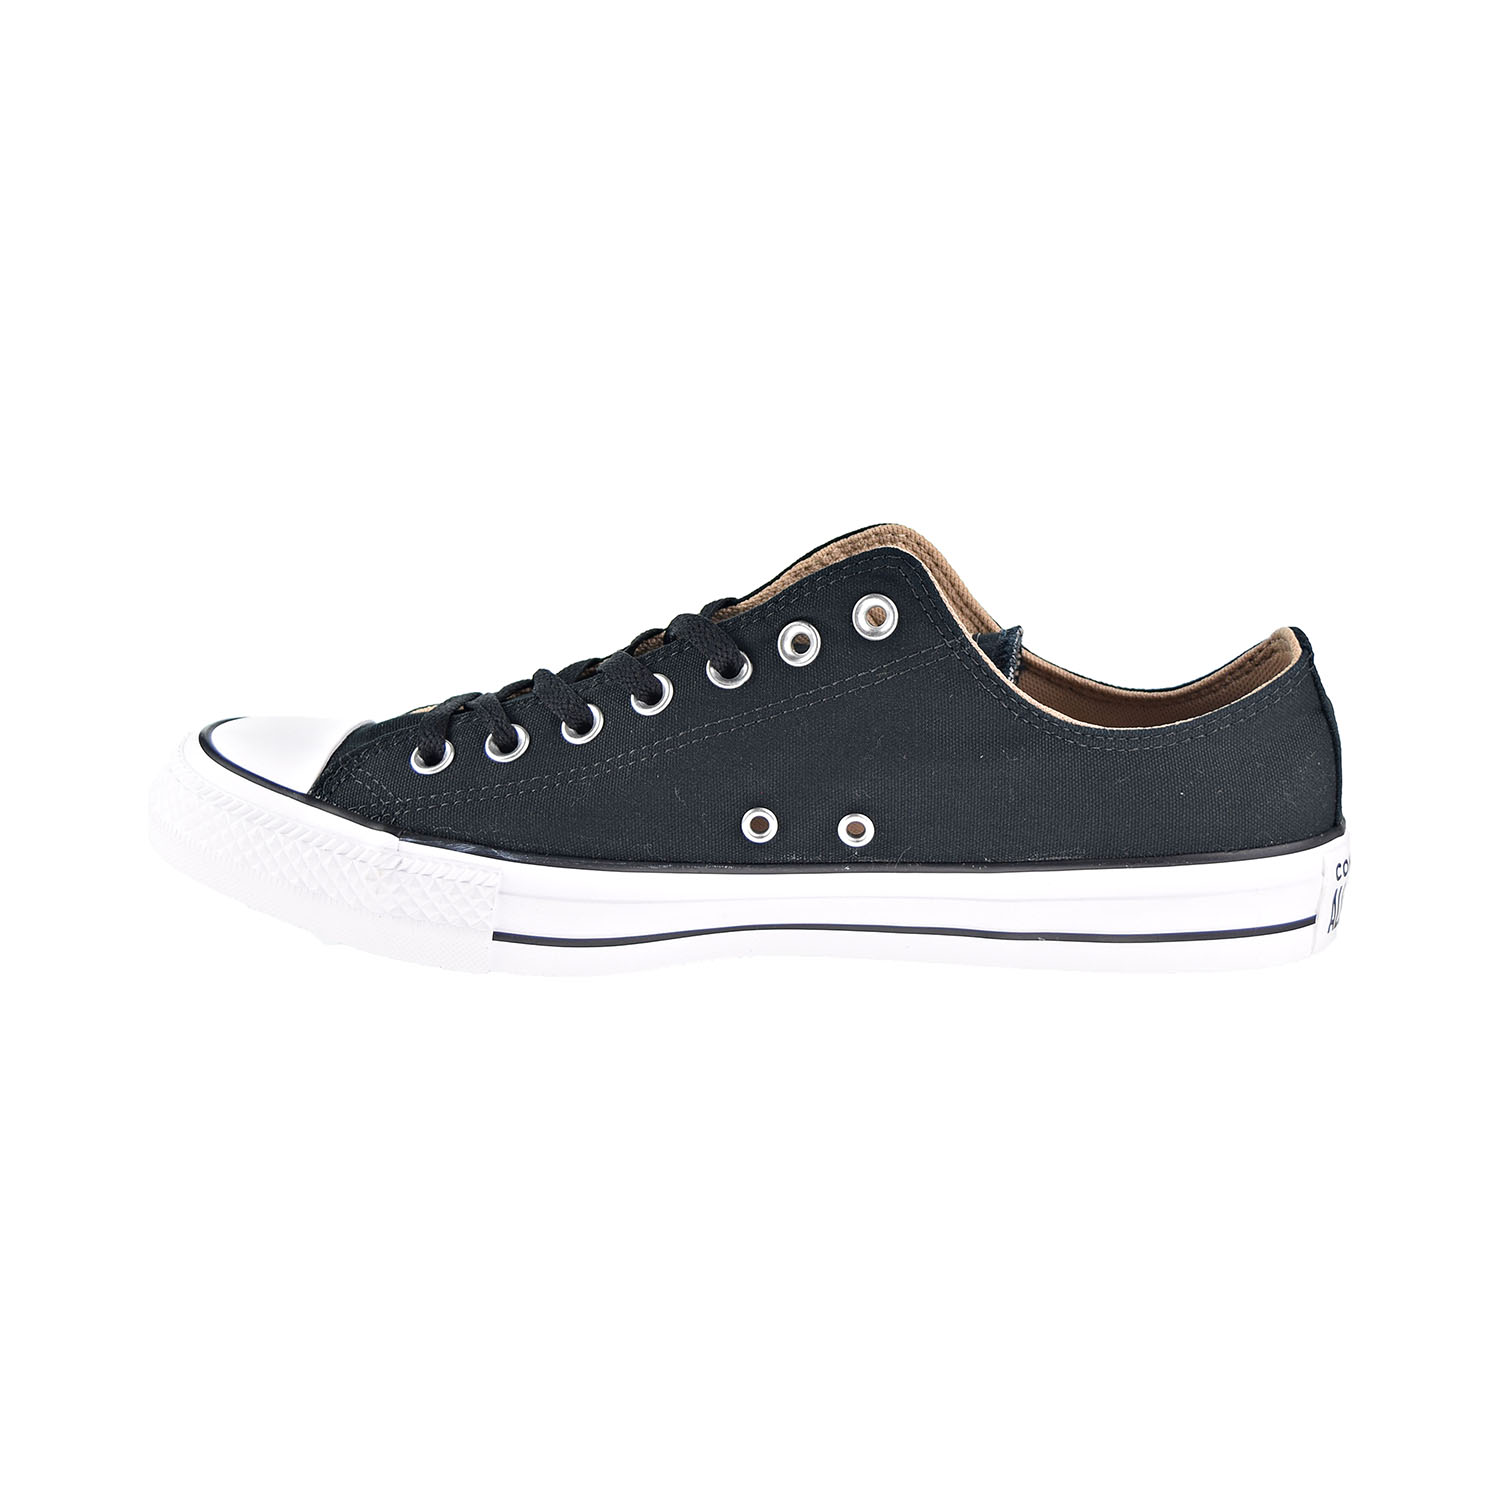 Converse Chuck Taylor All Star Ox "Camo Print" Men's Shoes Black-Multi-White 166234f - image 4 of 6